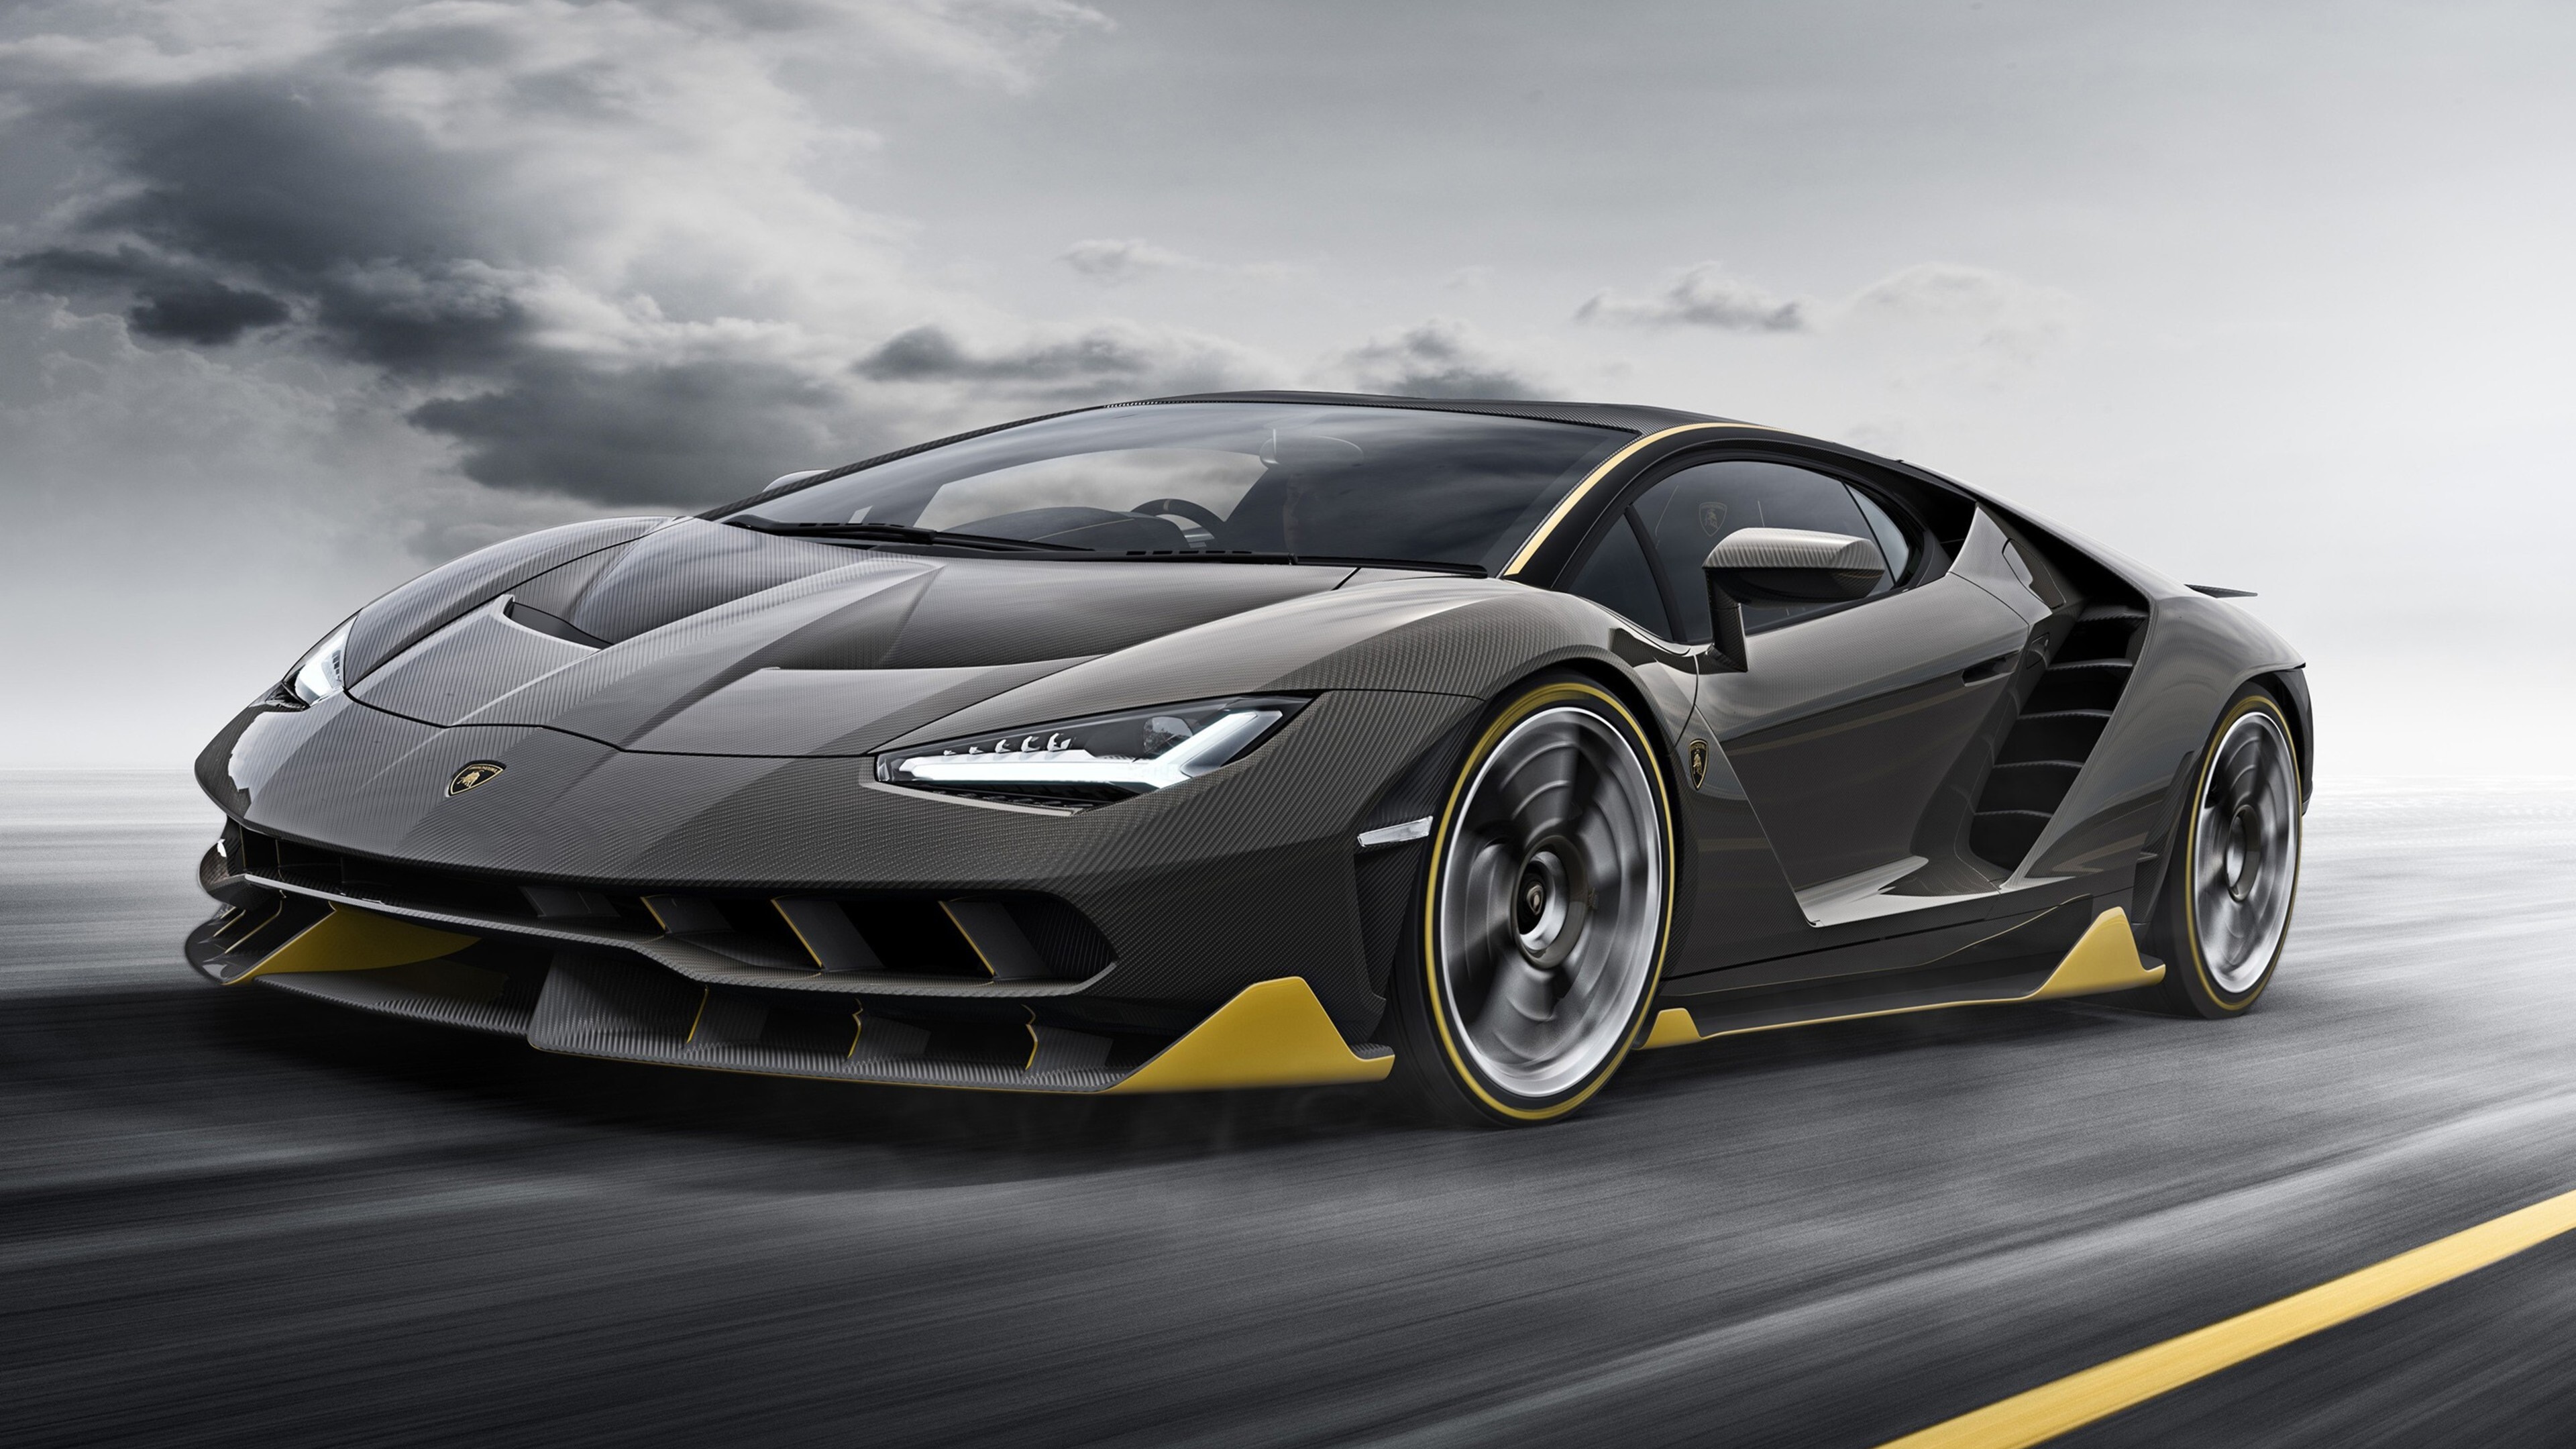 3840x2160 Lamborghini Centenario Super Car 4k HD 4k Wallpapers, Images